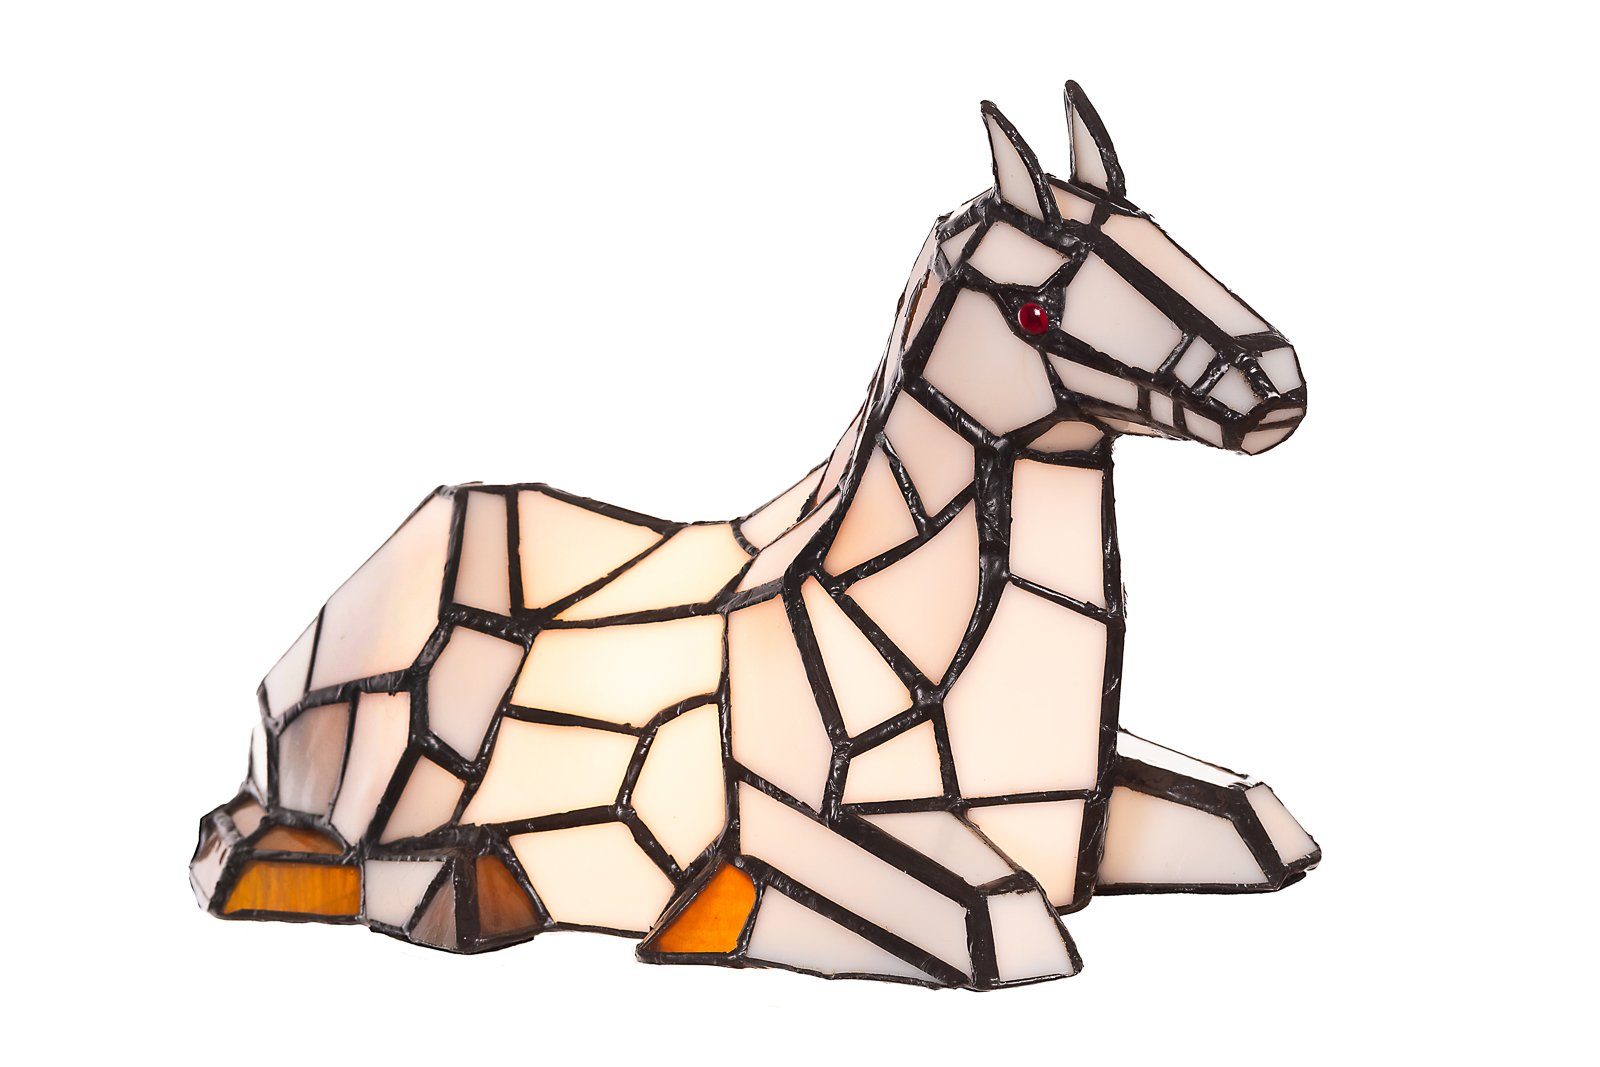 Pferd BIRENDY Stehlampe Birendy Dekorationslampe Style Tif163 Tiffany Lampe Tischlampe